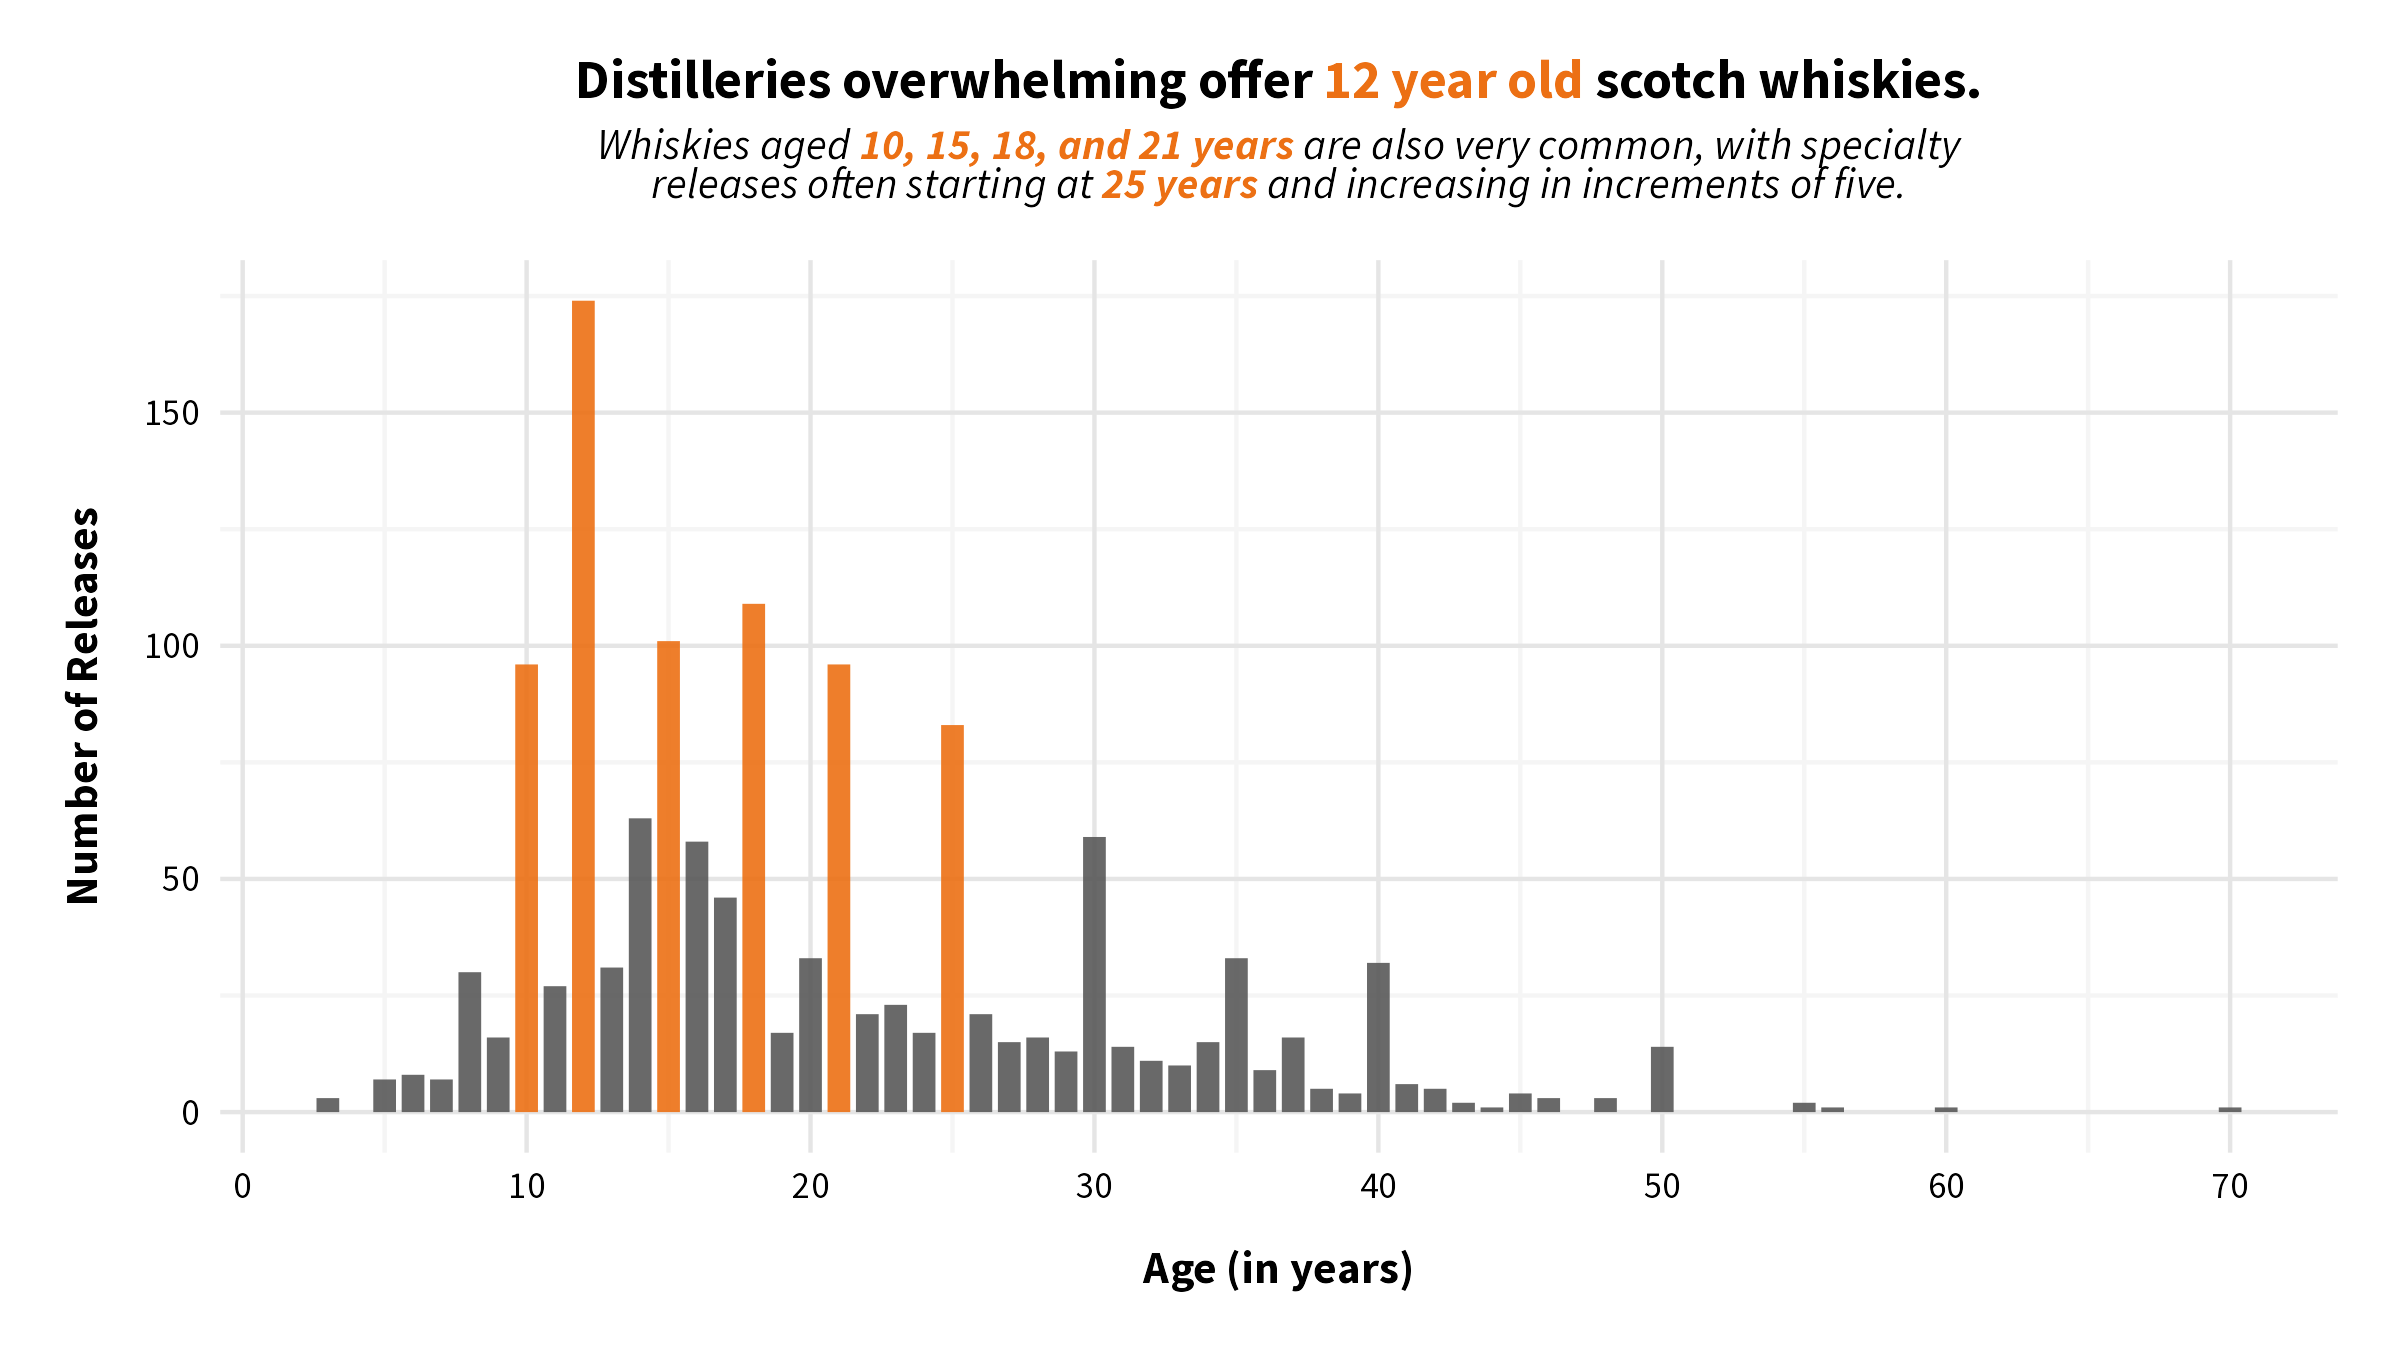 Figure describing the distribution of scotch ages.